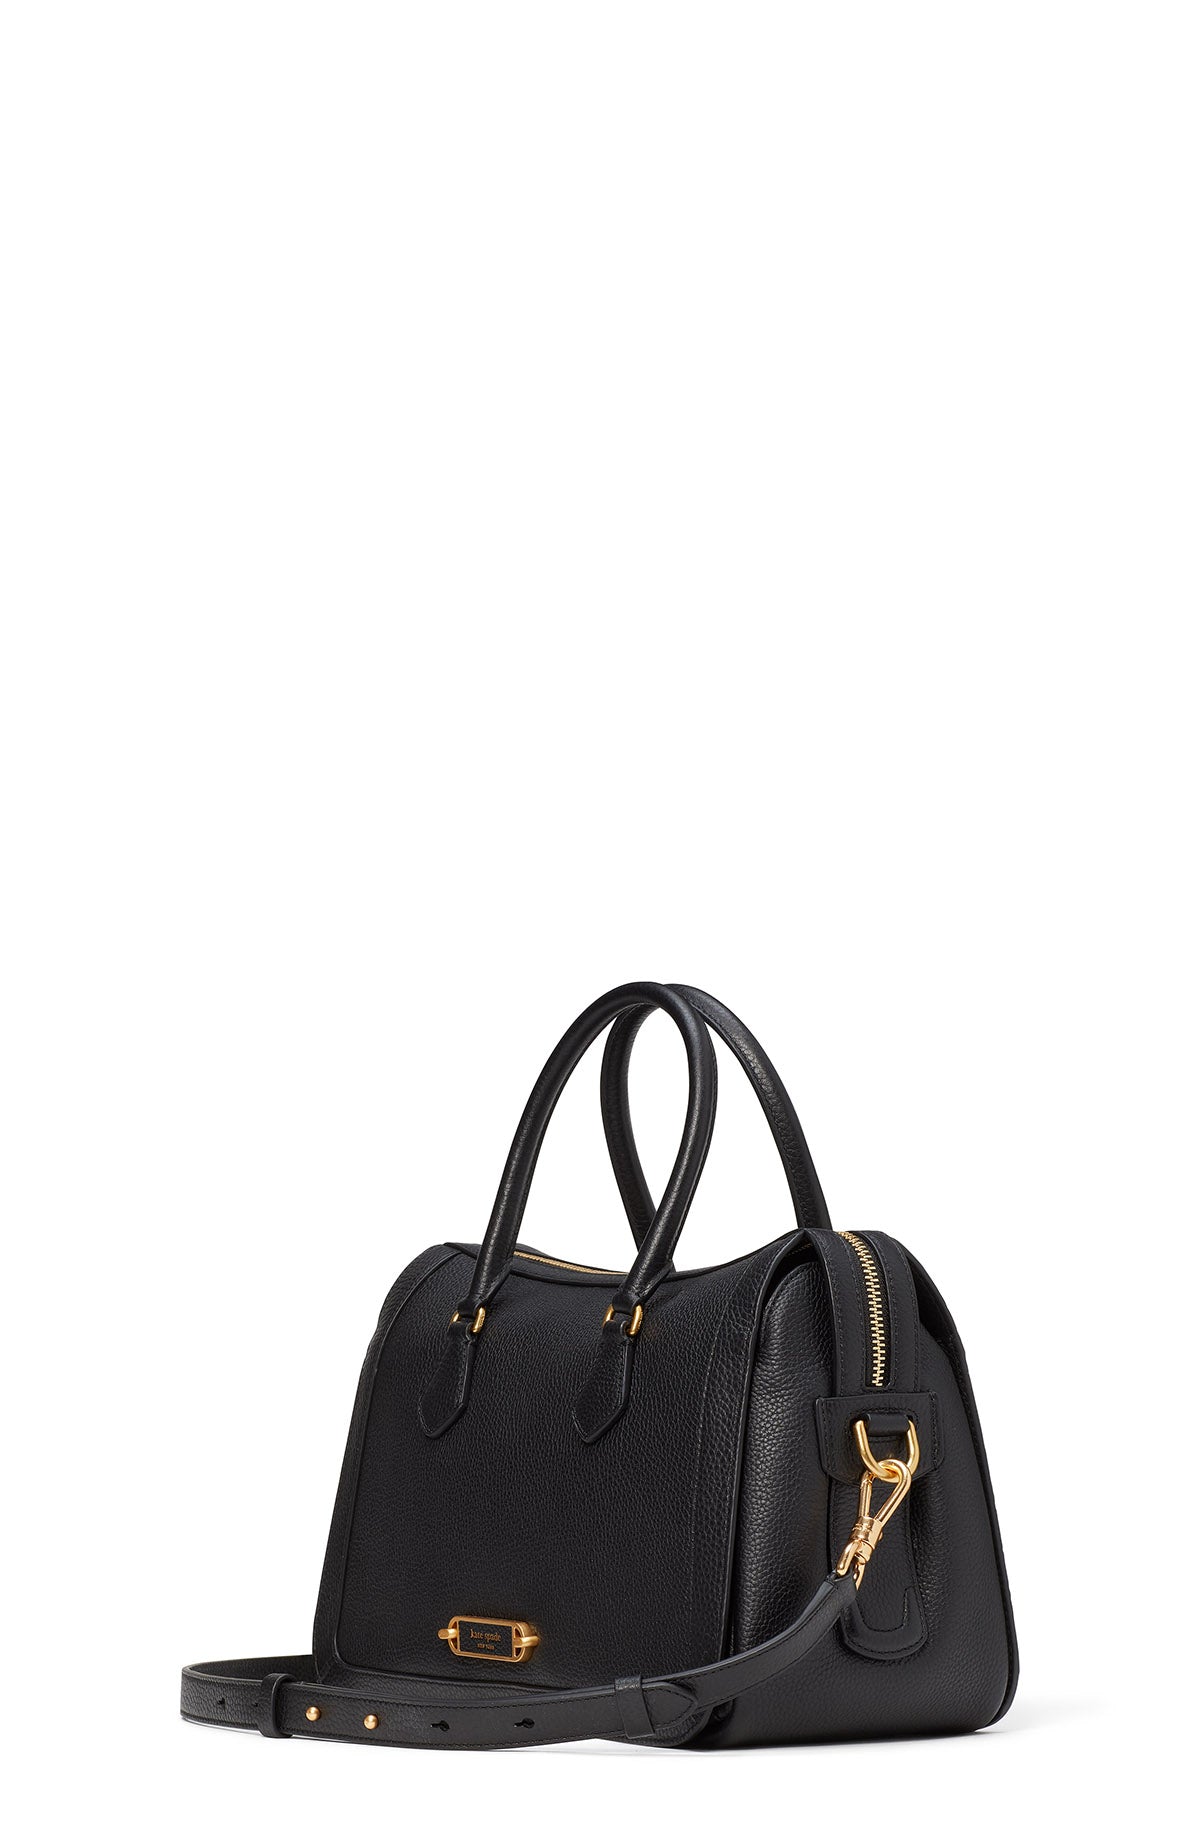 K9914-gramercy medium satchel-Black